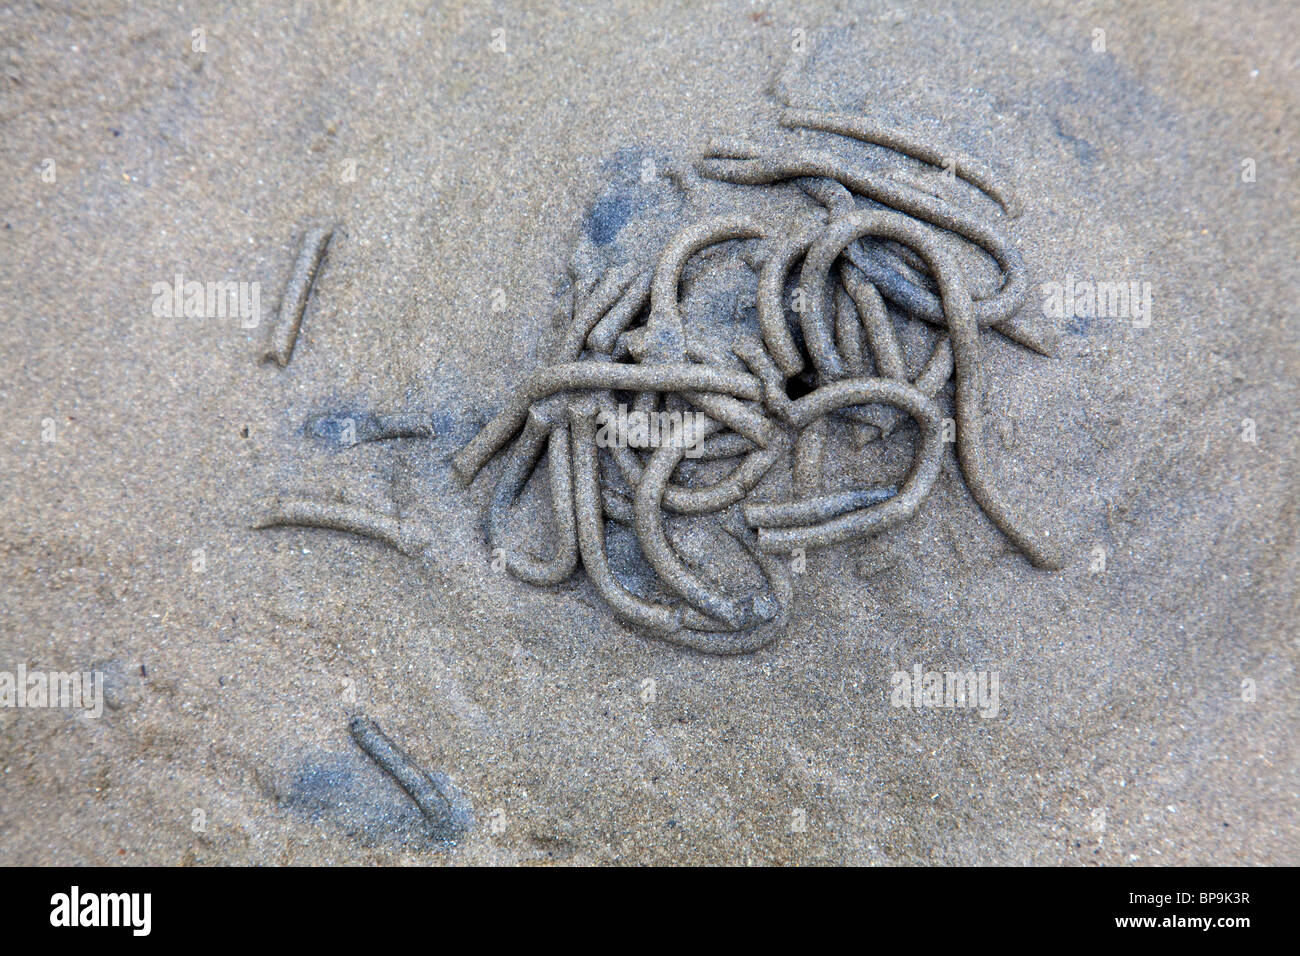 Sea worm mounds Stock Photo